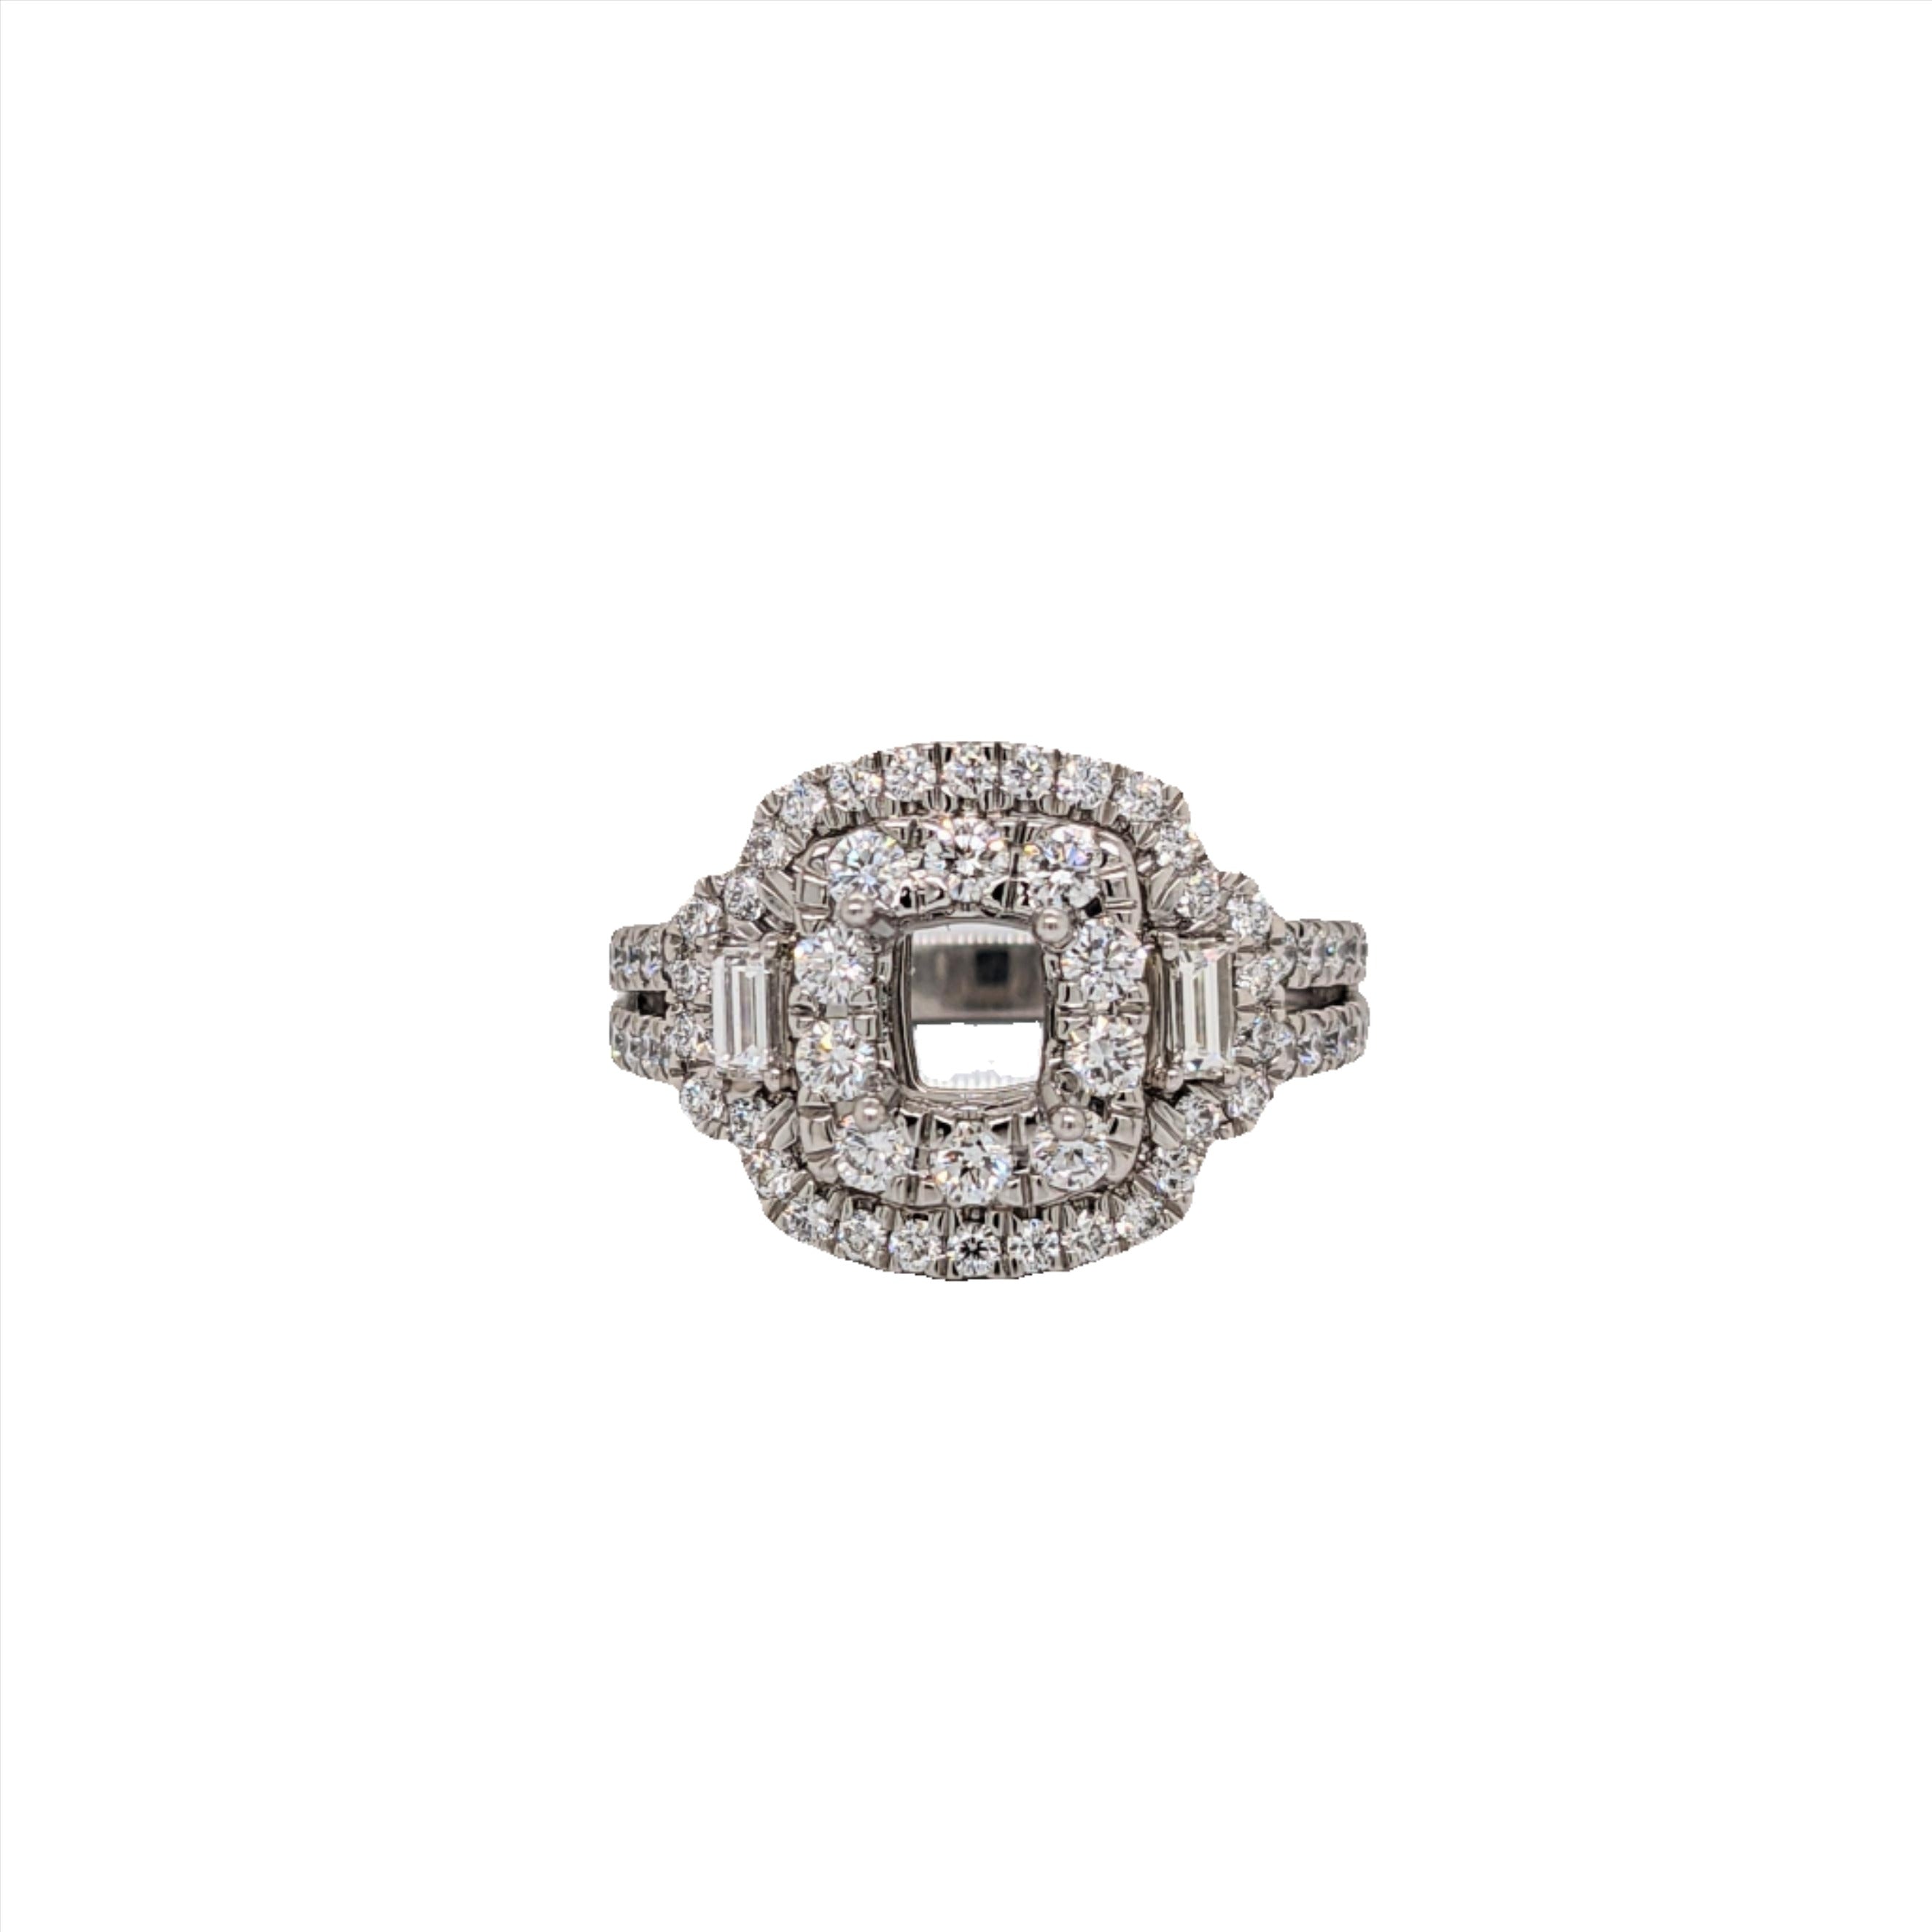 Double Diamond Halo Ring Semi Mount in Platinum w Baguette Diamond Accents | Cushion Cut | Pave Diamond Split Shank |Engagement Ring Setting